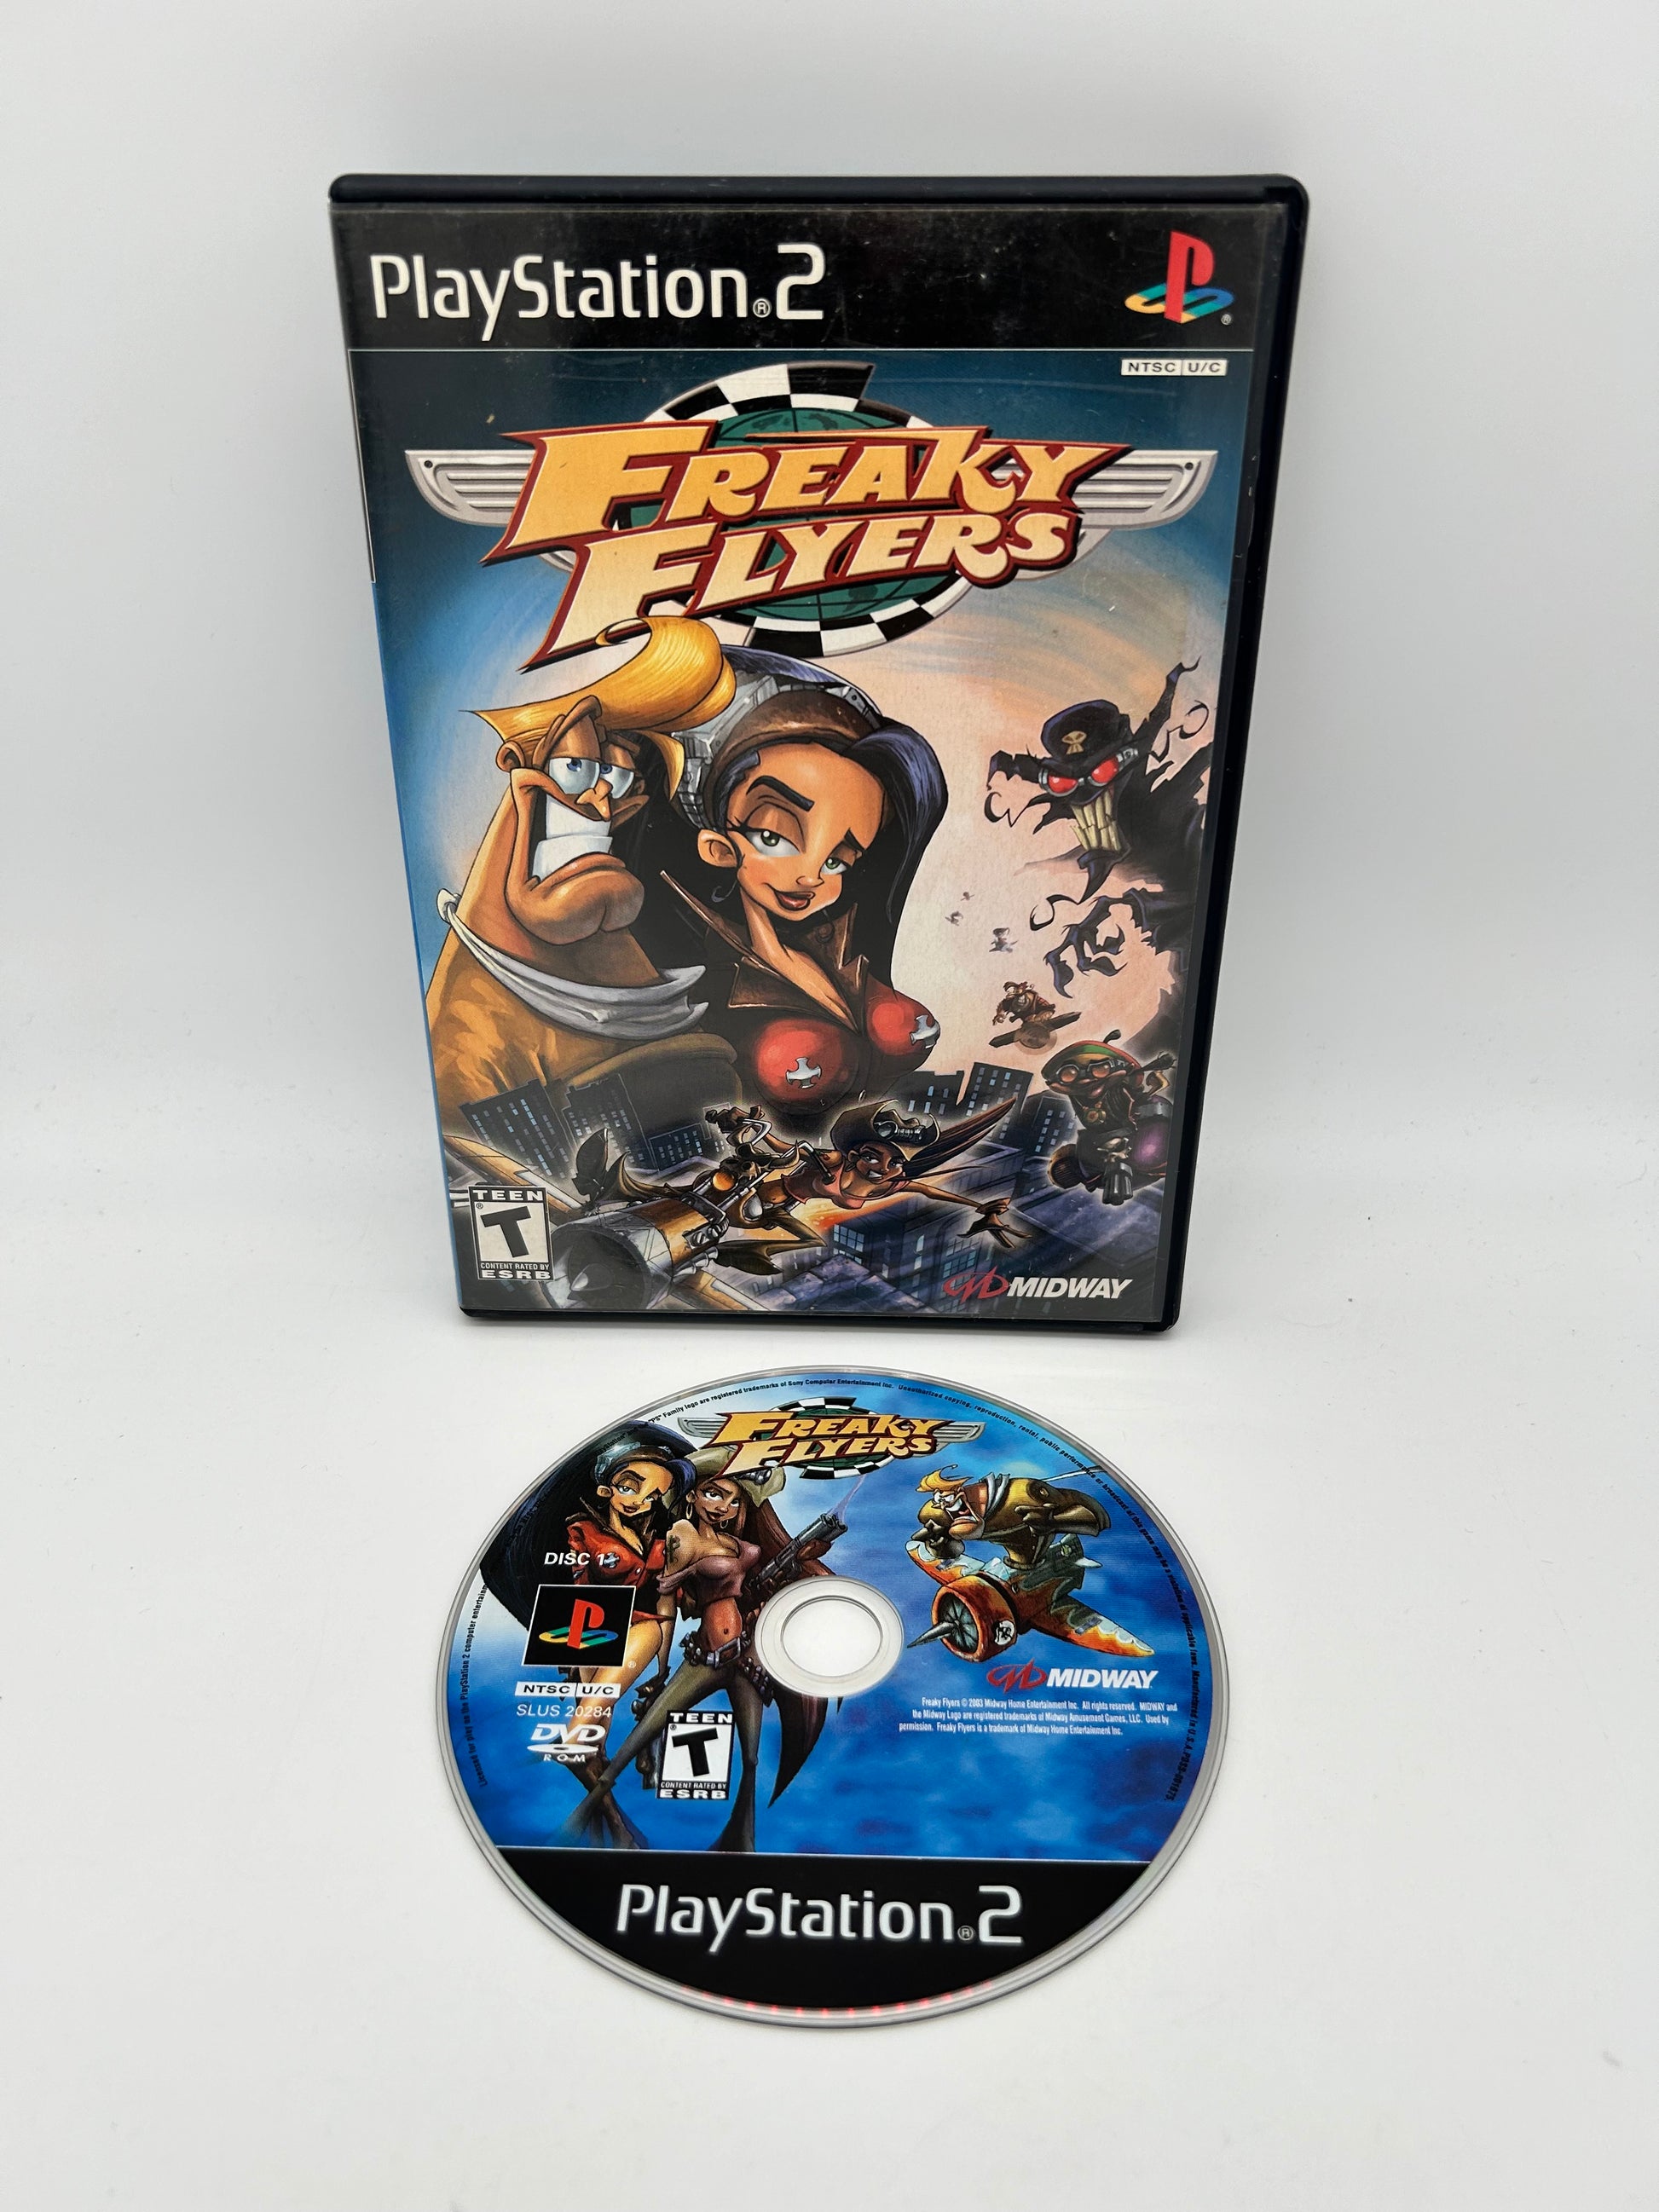 PiXEL-RETRO.COM : SONY PLAYSTATION 2 (PS2) COMPLET CIB BOX MANUAL GAME NTSC FREAKY FLYERS